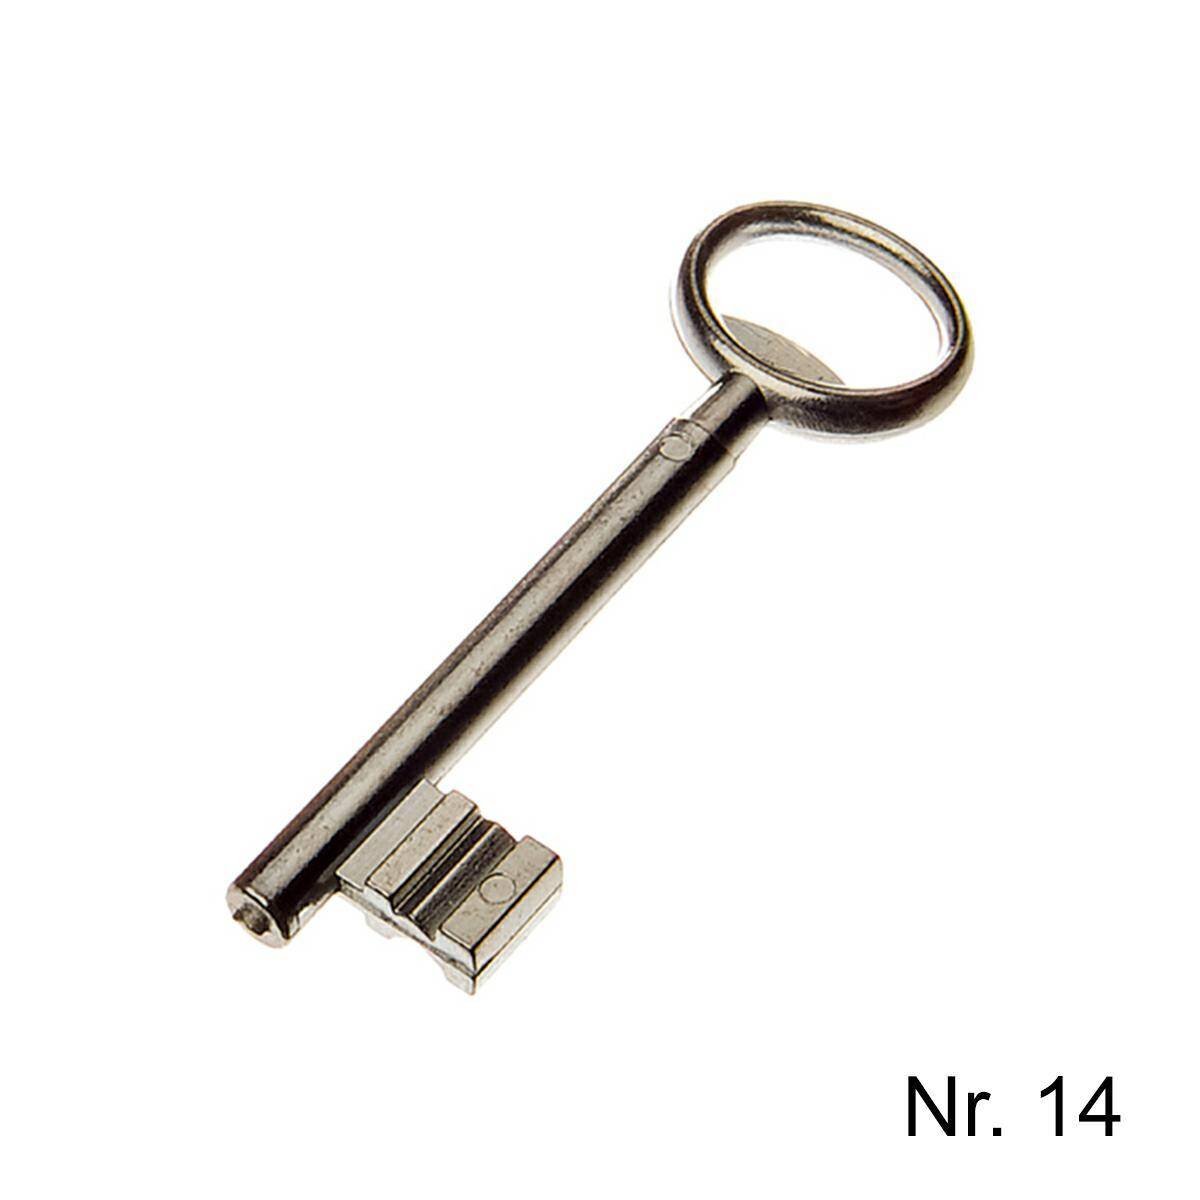 Cast key Jania for the lock - No. 14